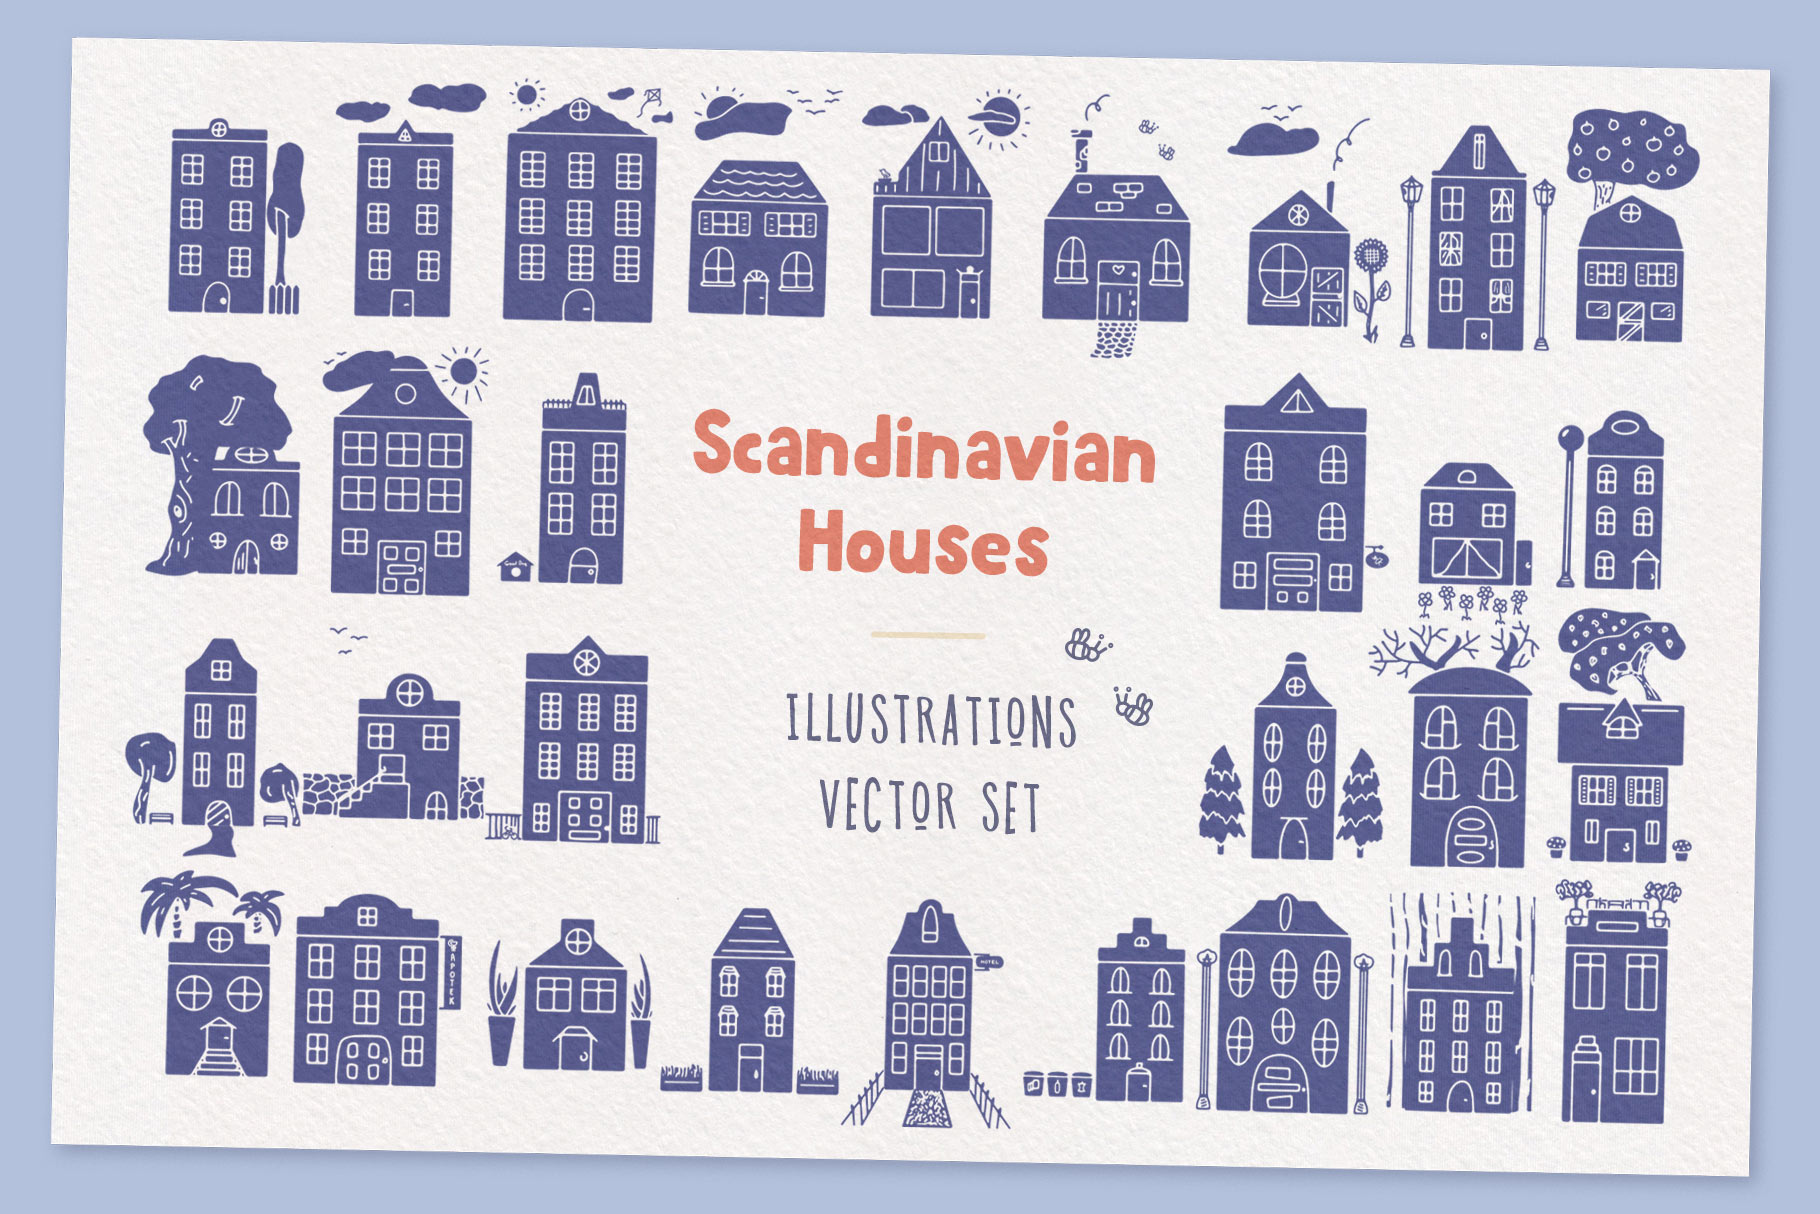 Scandinavian Houses: Free Vector Images